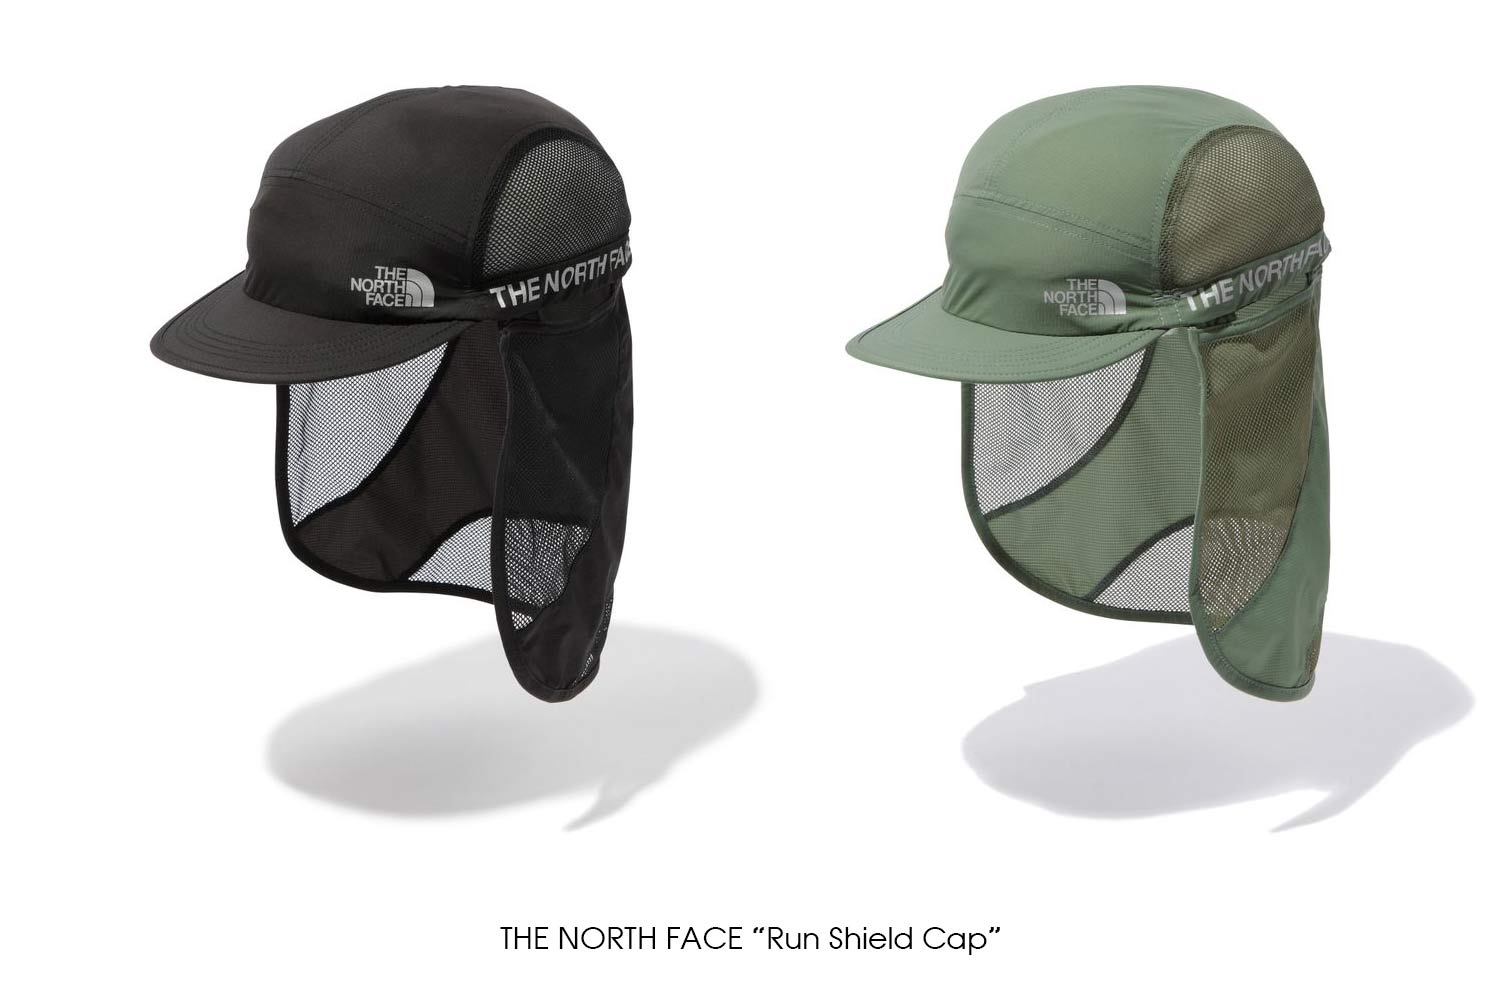 THE NORTH FACE "Run Shield Cap"